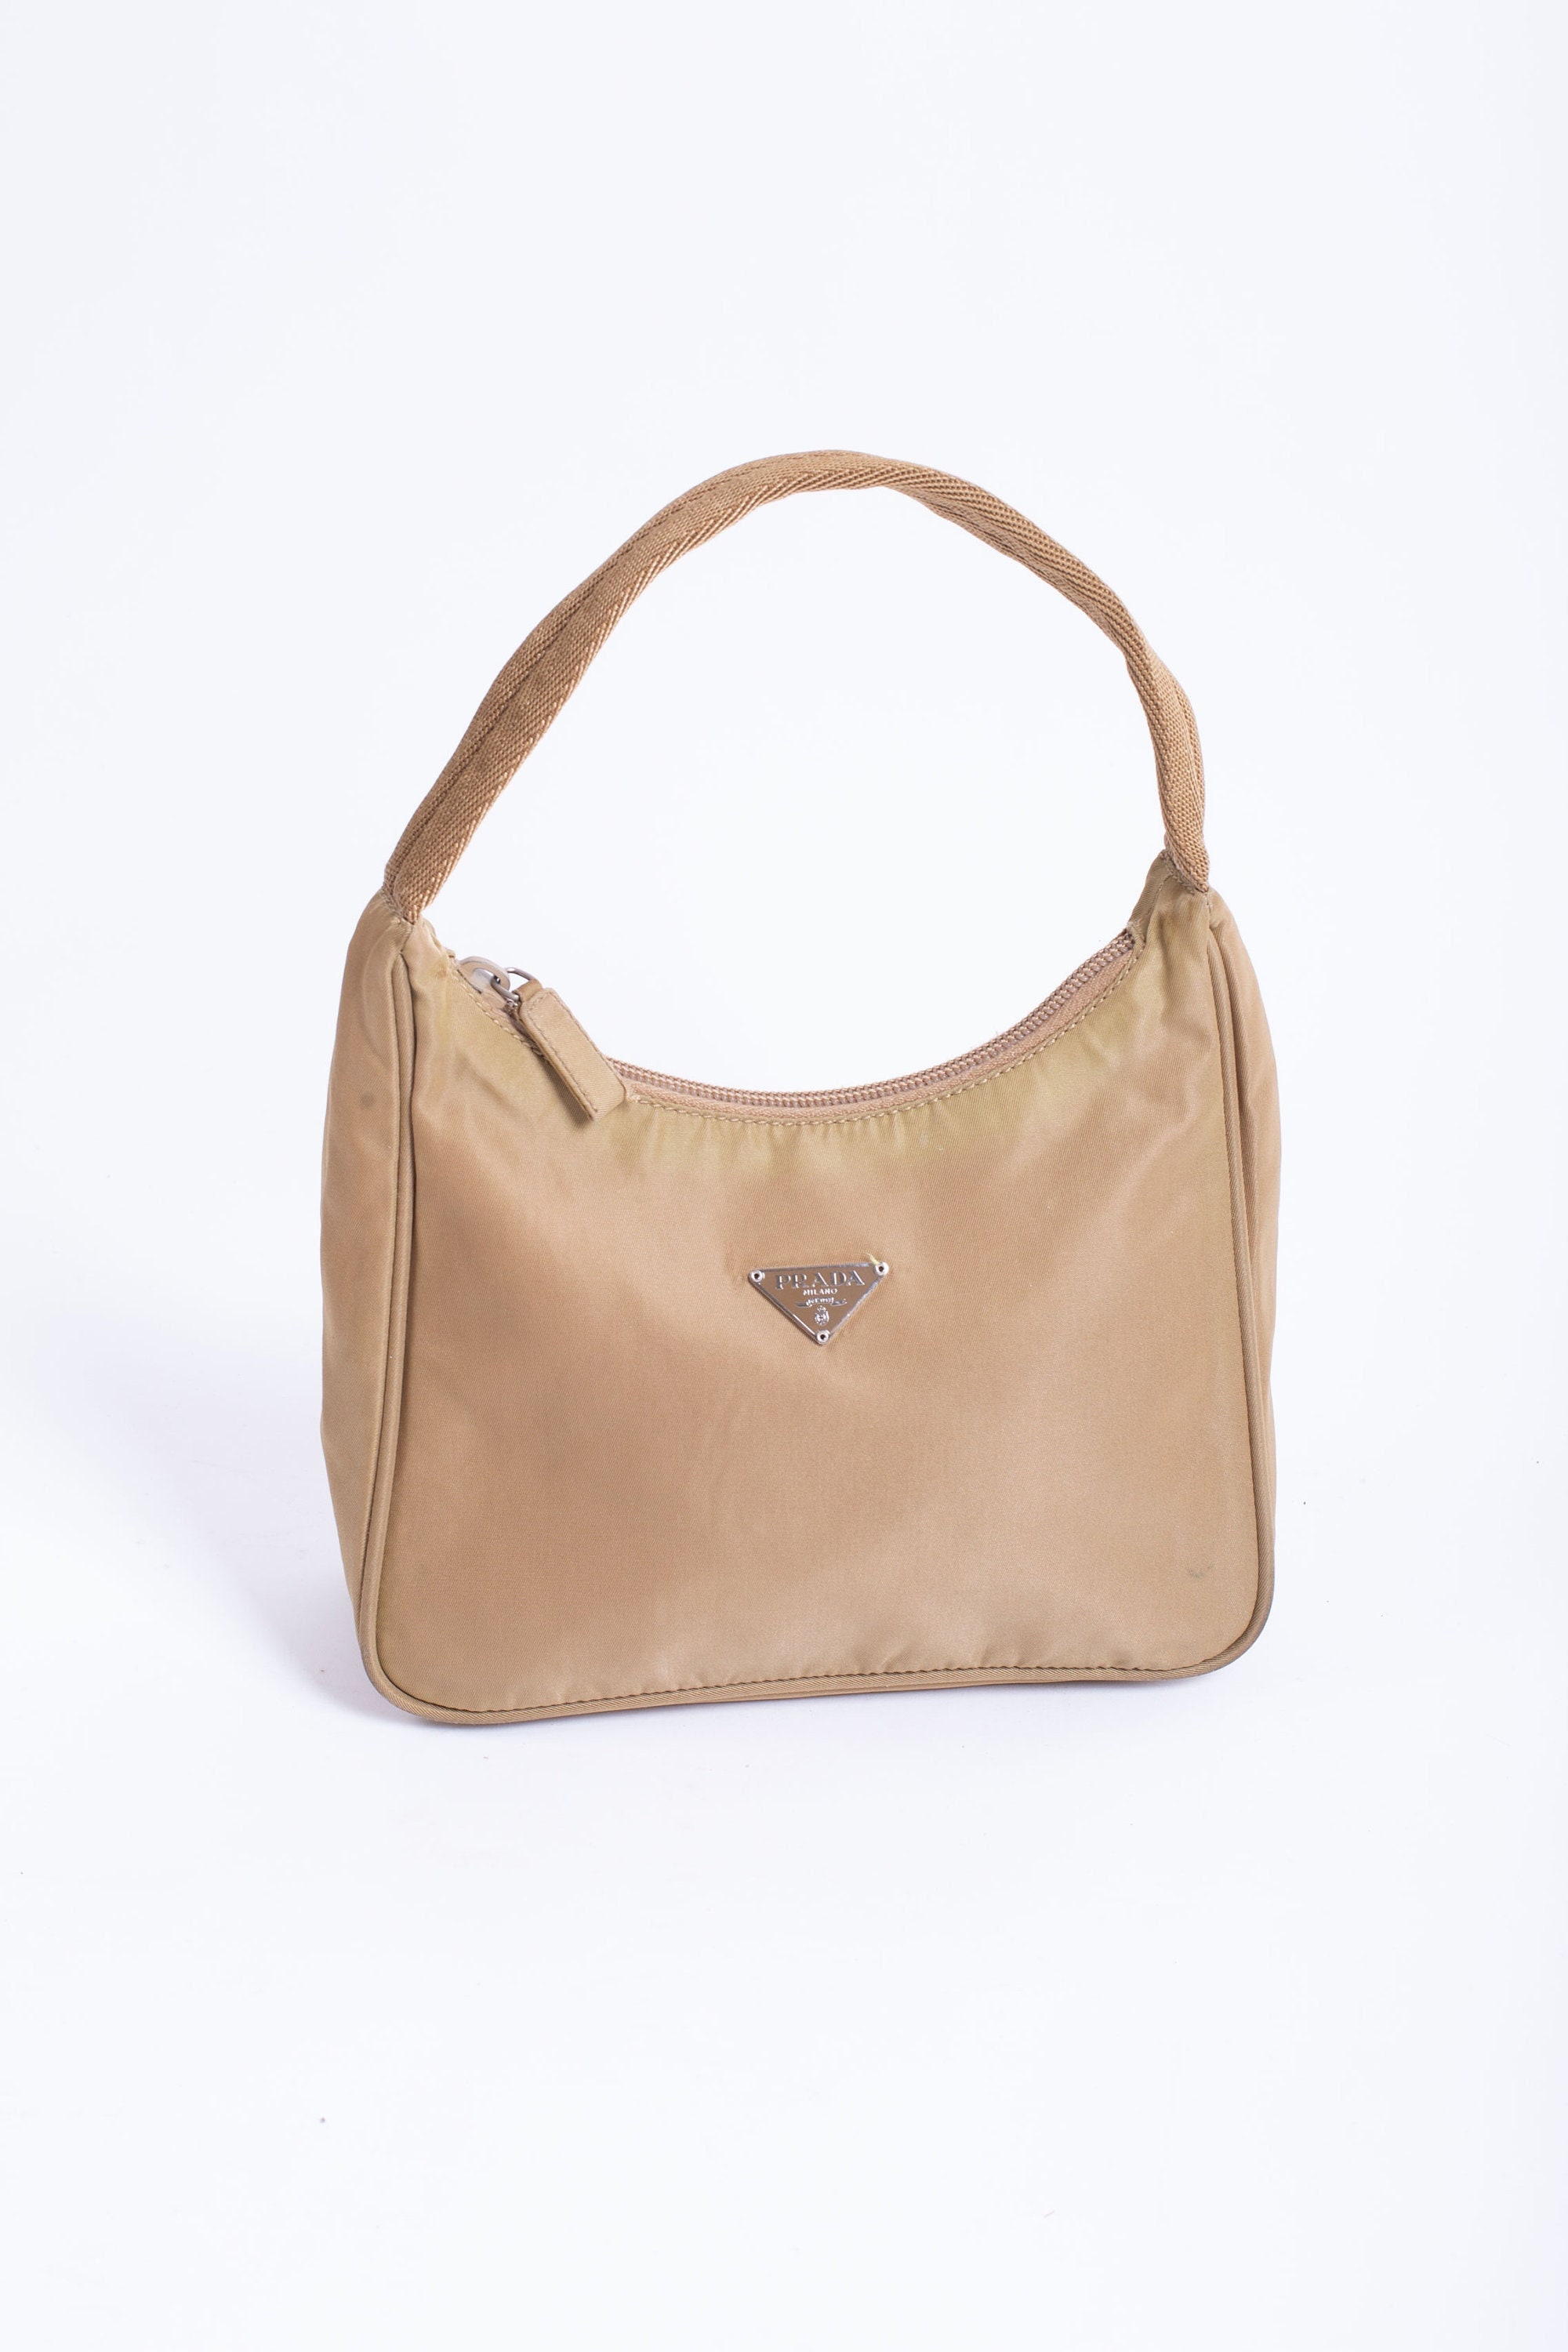 Prada Saffiano Mini Boston Bag Handbag Leather Beige Women No accessories  Used